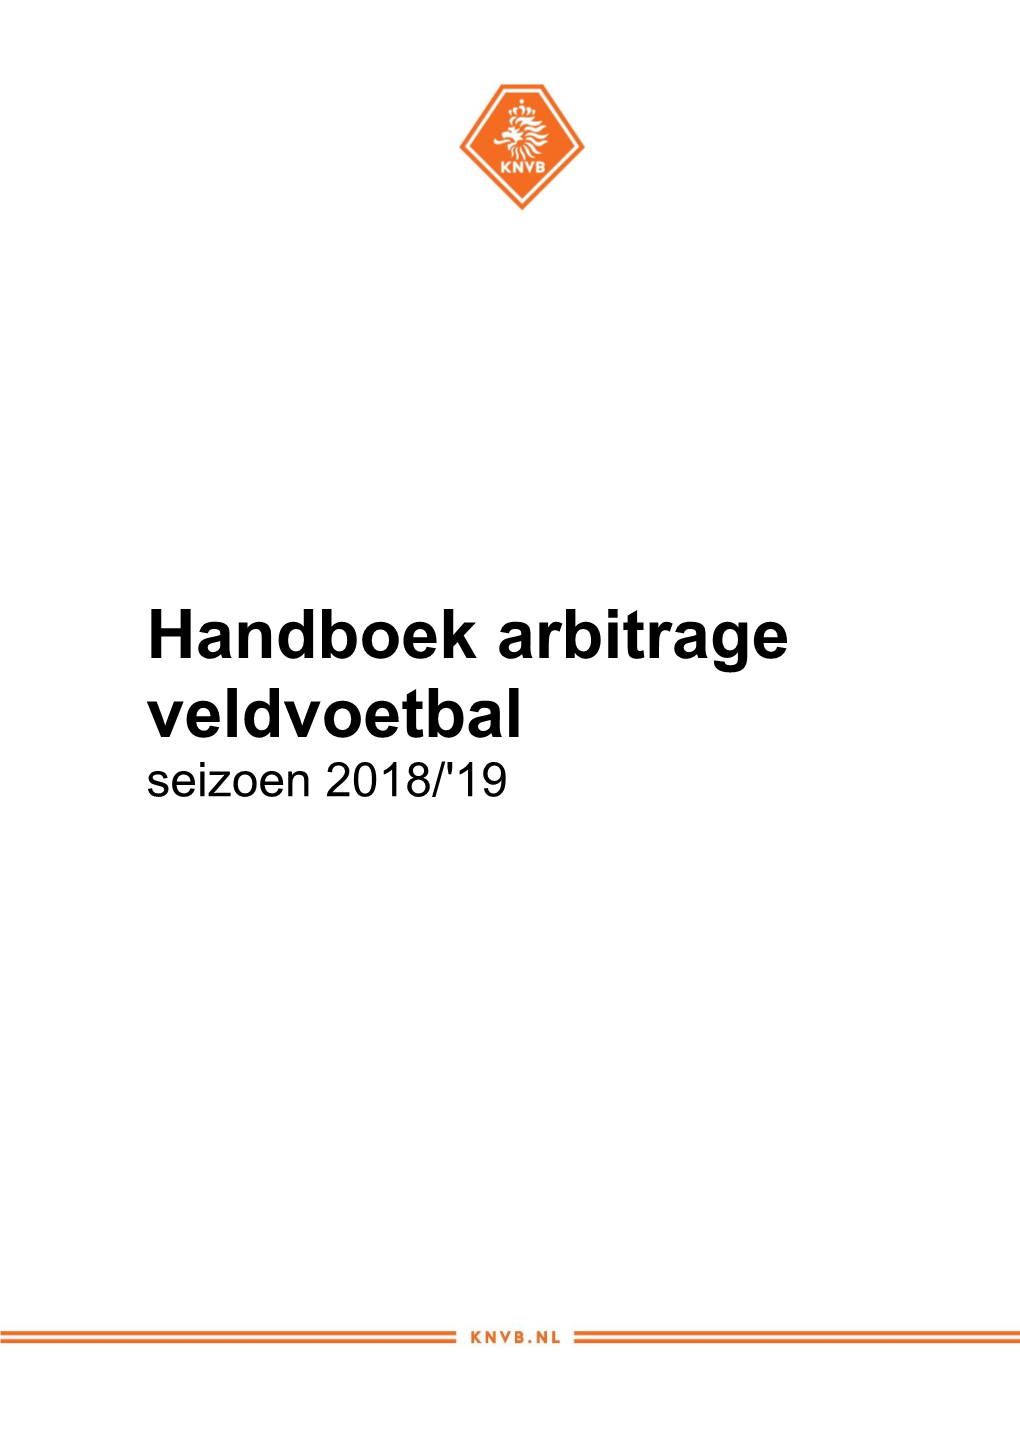 Handboek Arbitrage Veldvoetbal 2018-2019